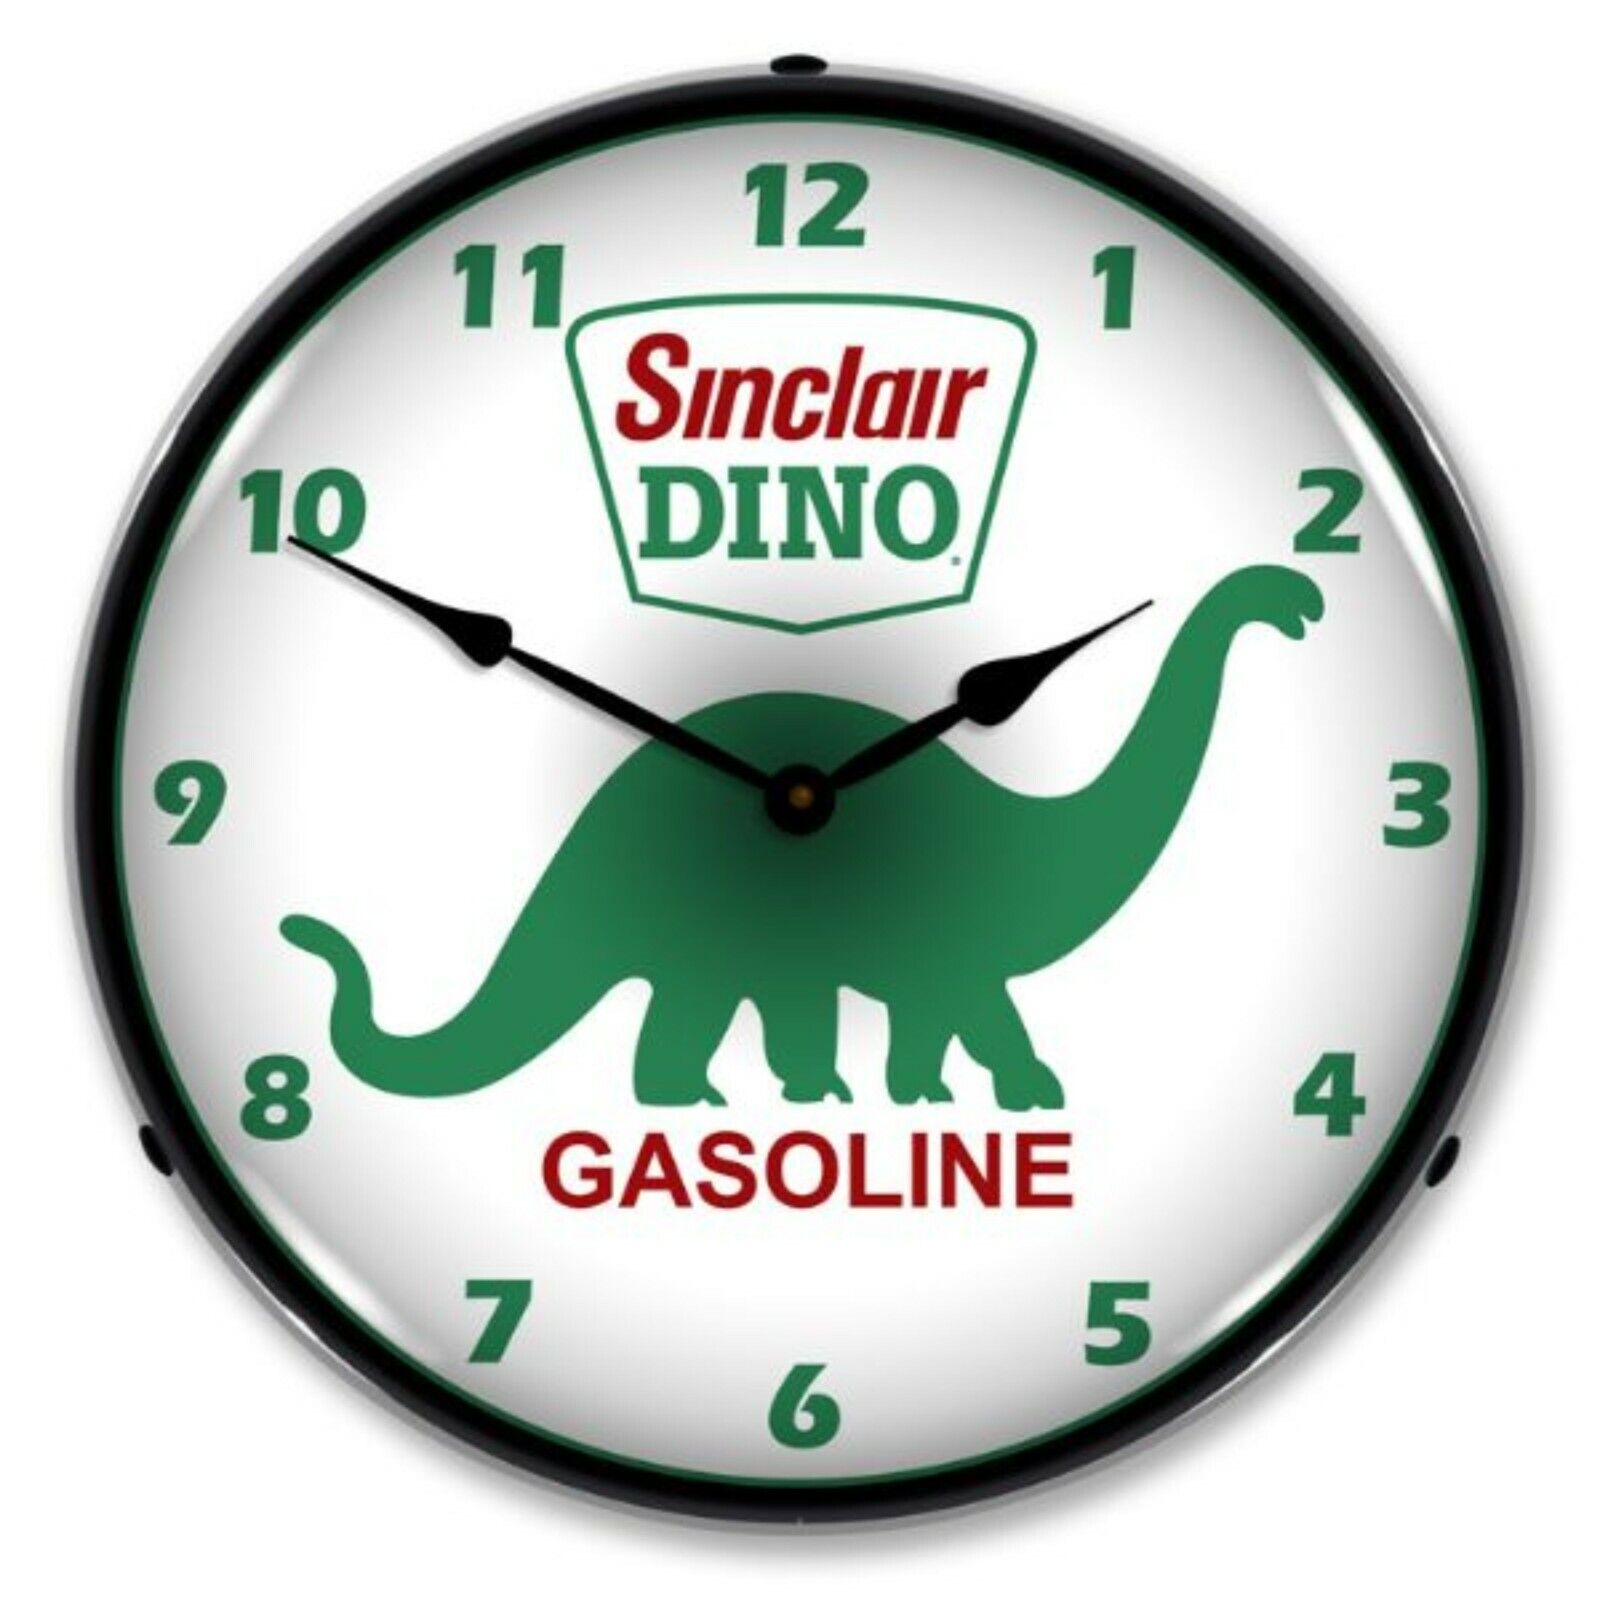 Sinclair Dinosaur Dino Gasoline LED Clock Garage Oil Man Cave Lighted Nostalgic